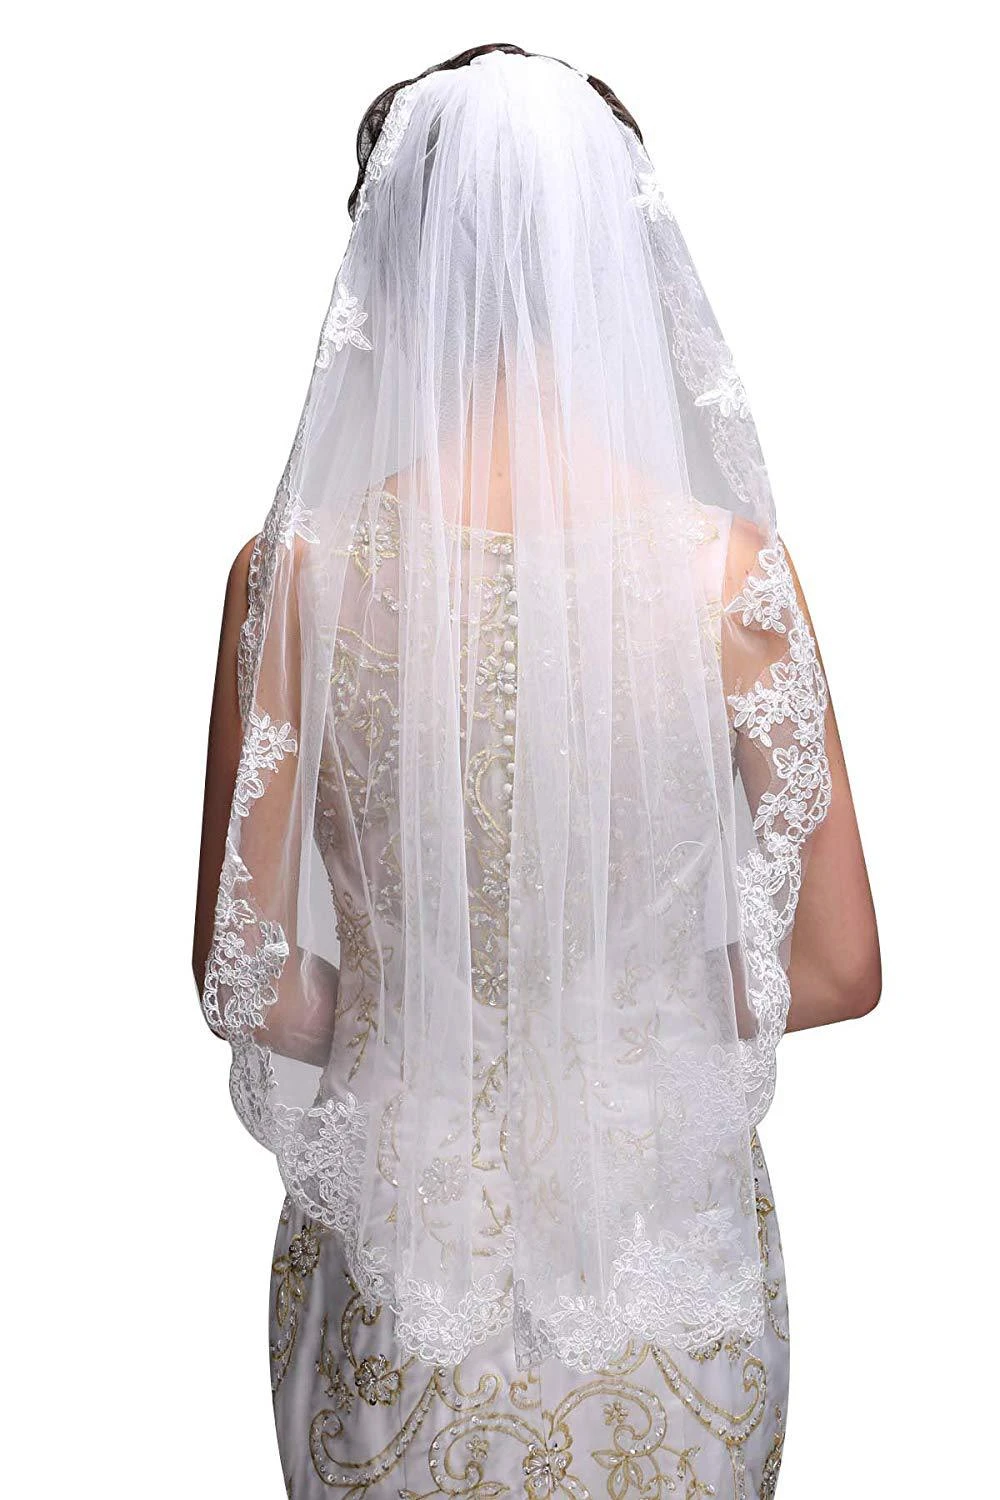 White/Ivory Wedding Veil Short Bridal Veil Head Veil Wedding Accessories 2021